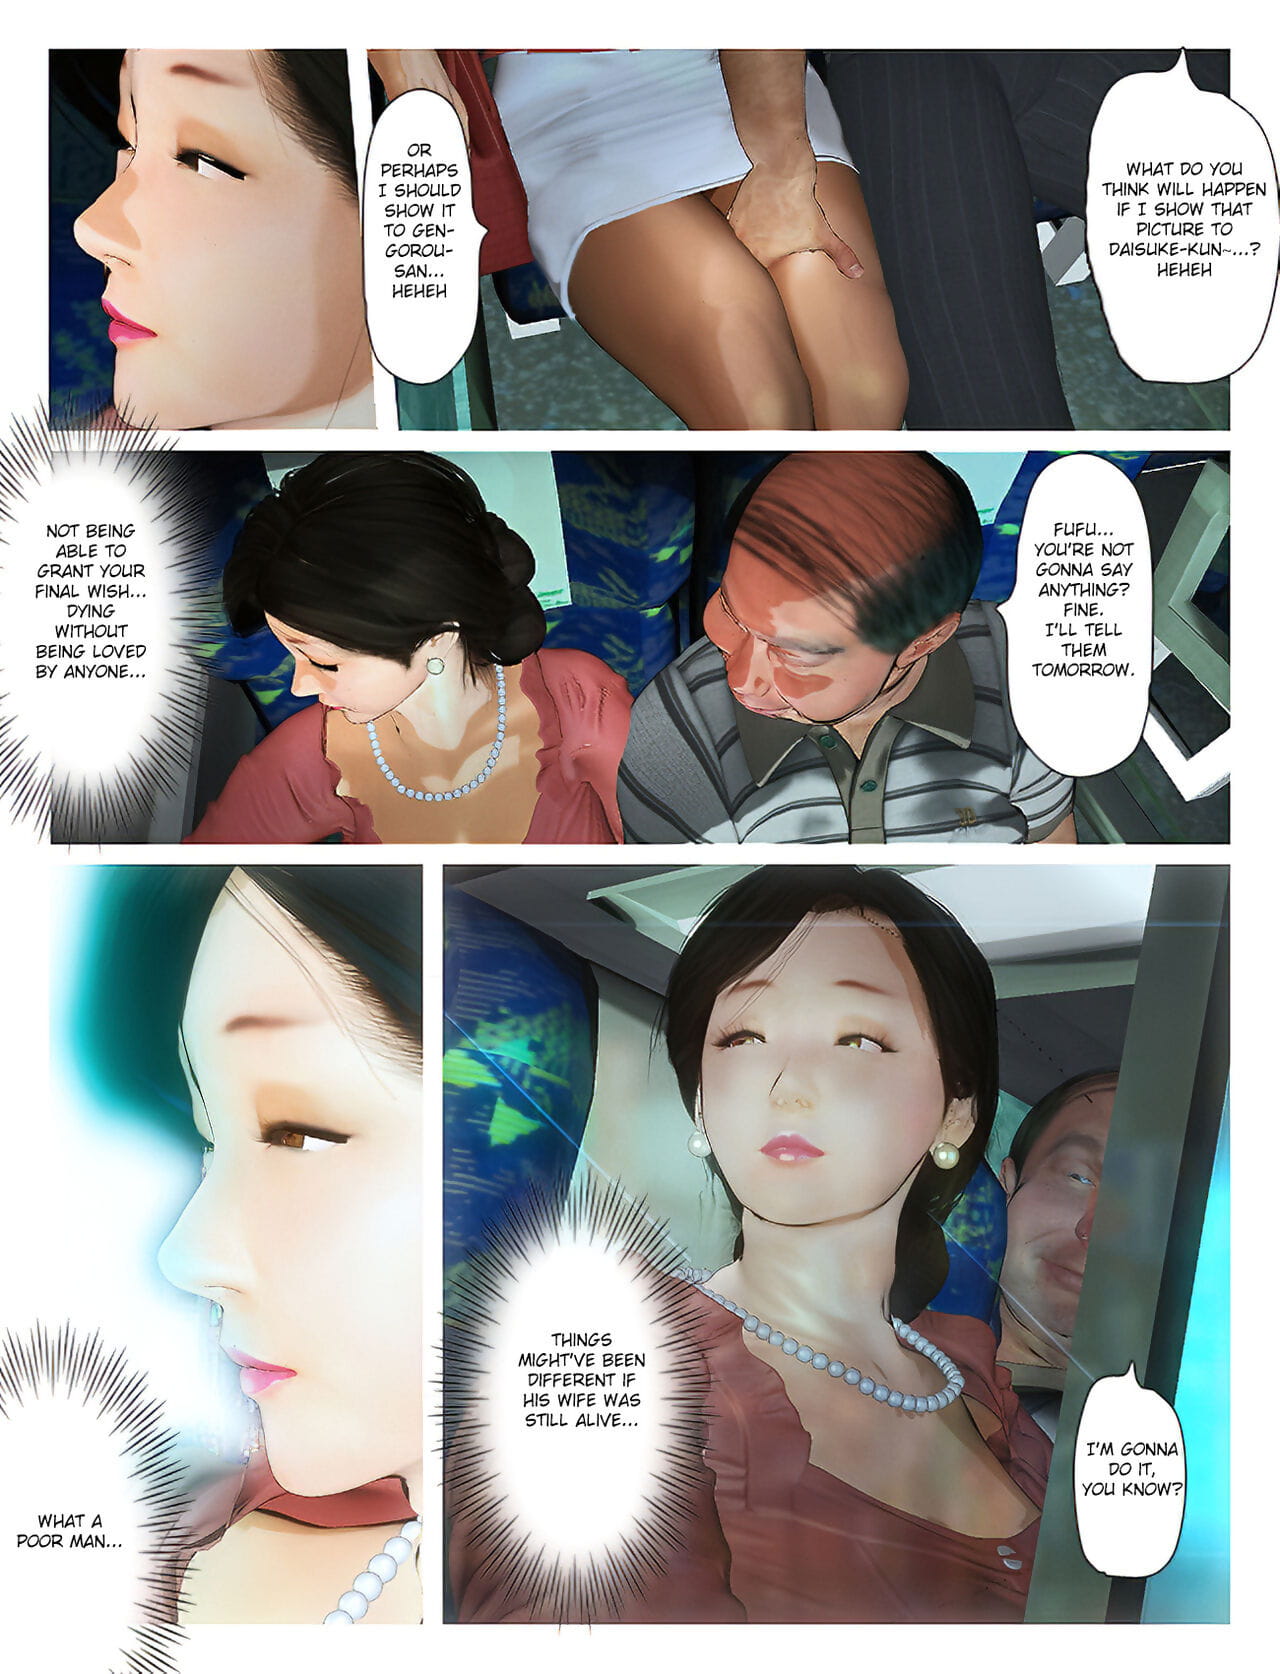 Kyou no misako san 2019:2 parte 2 page 1